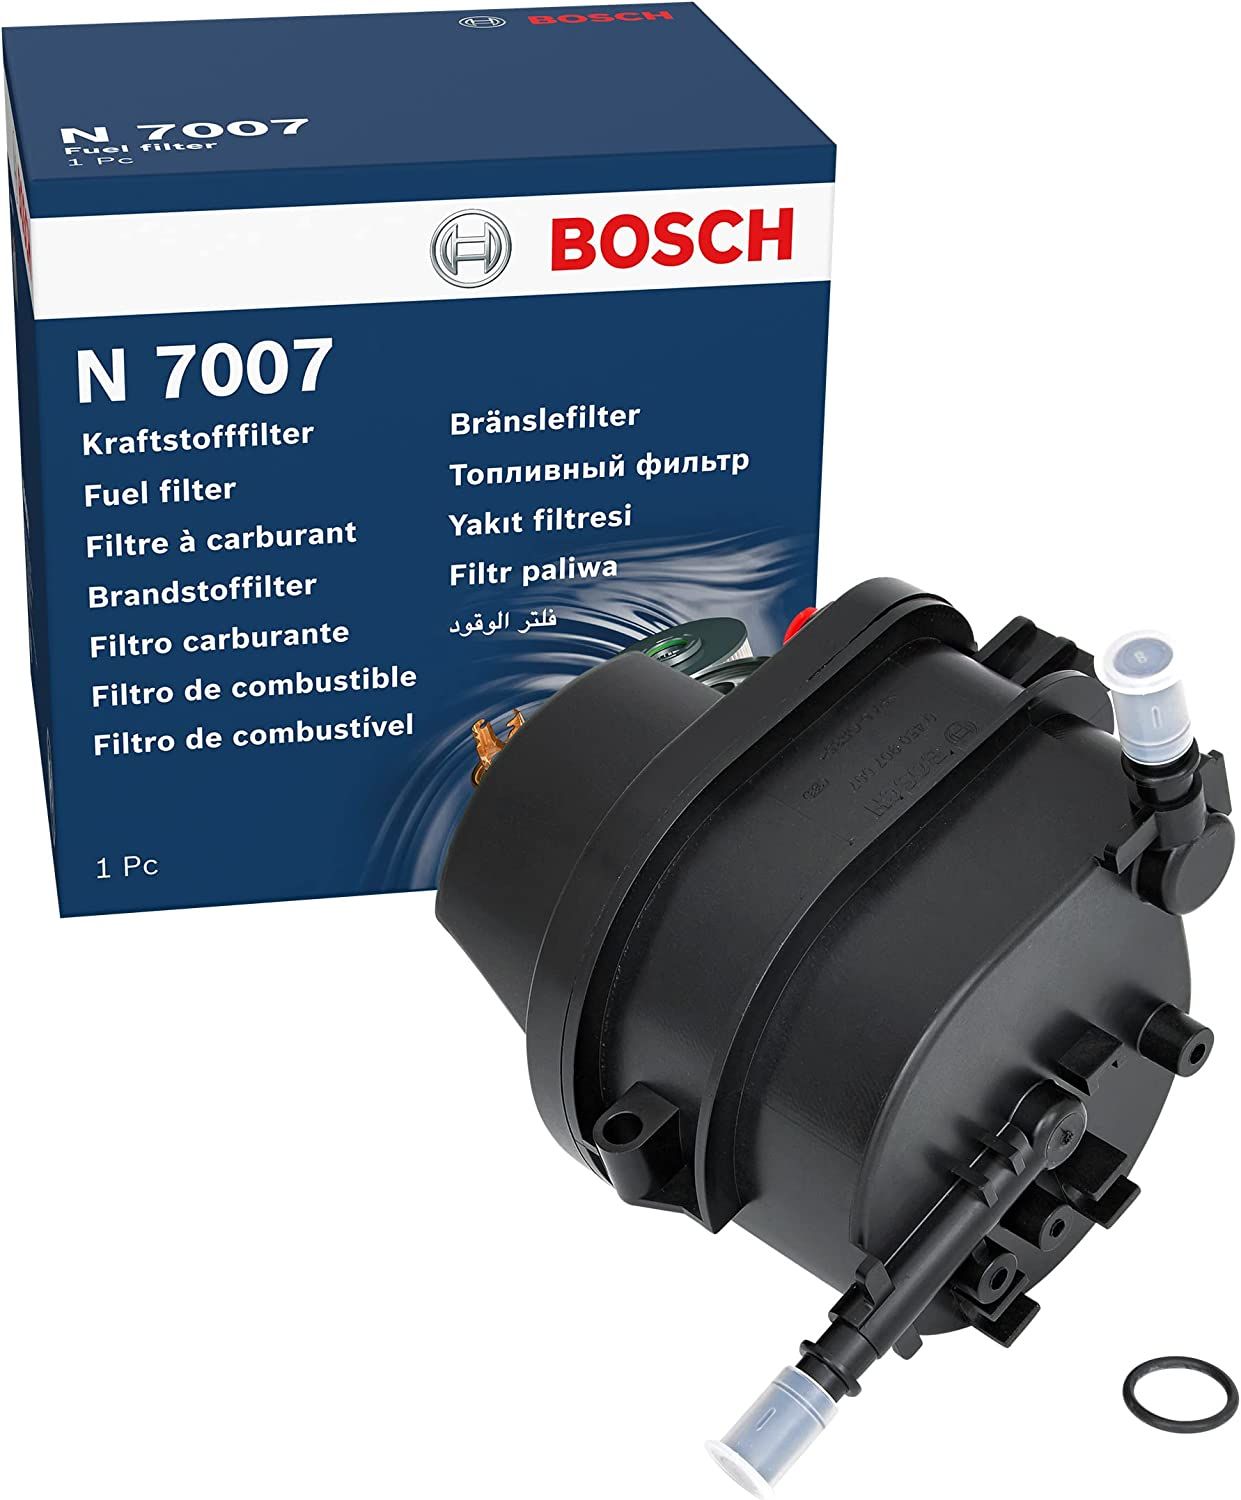 Peugeot 207 1.4 Hdi Dizel Mazot Filtresi Müşürsüz Bosch Marka